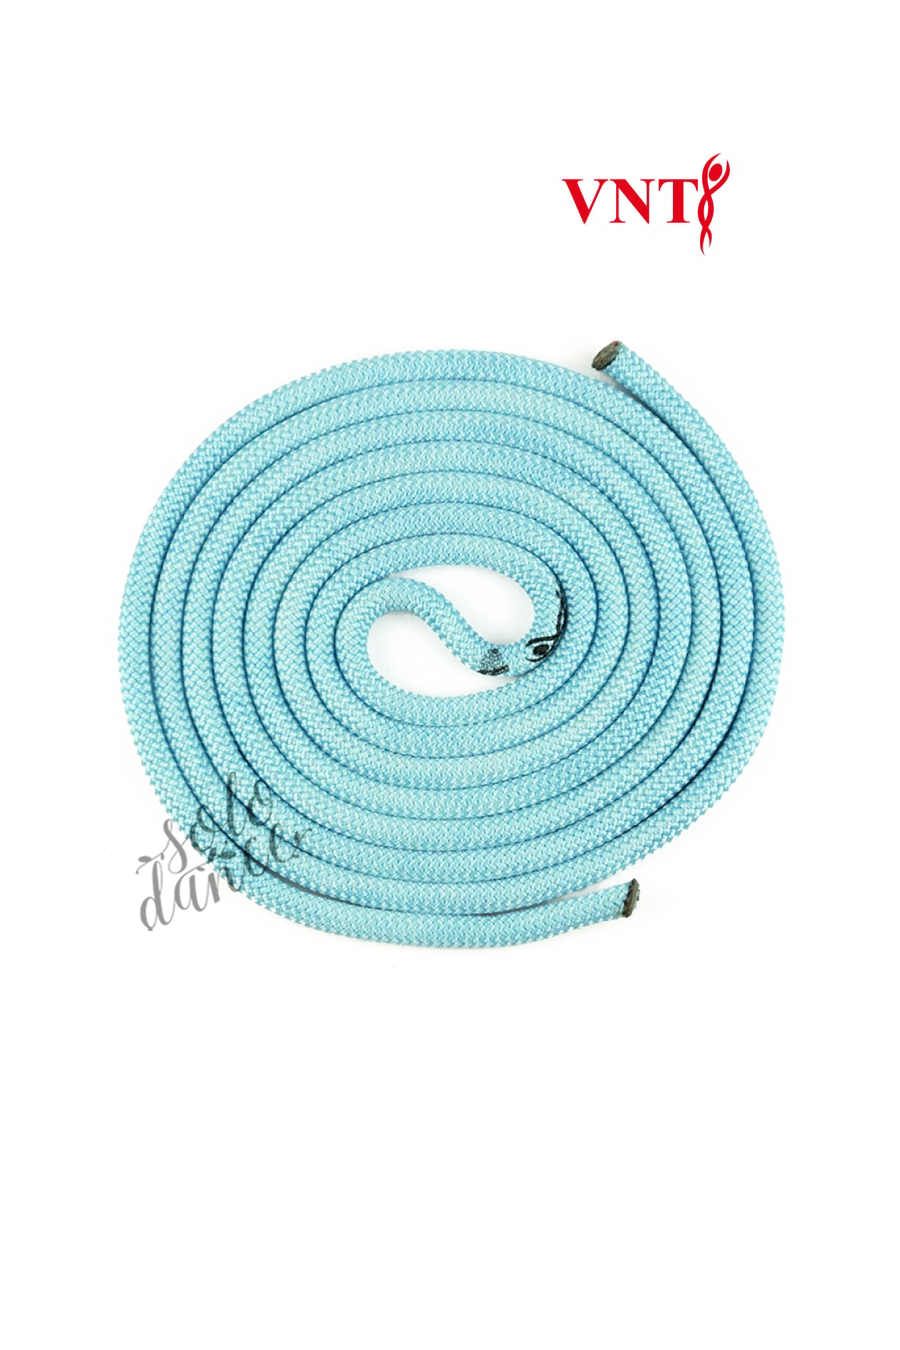 Rope Venturelli for rythmic gymnastic ROP-PL2-211 Aquamarine FIG